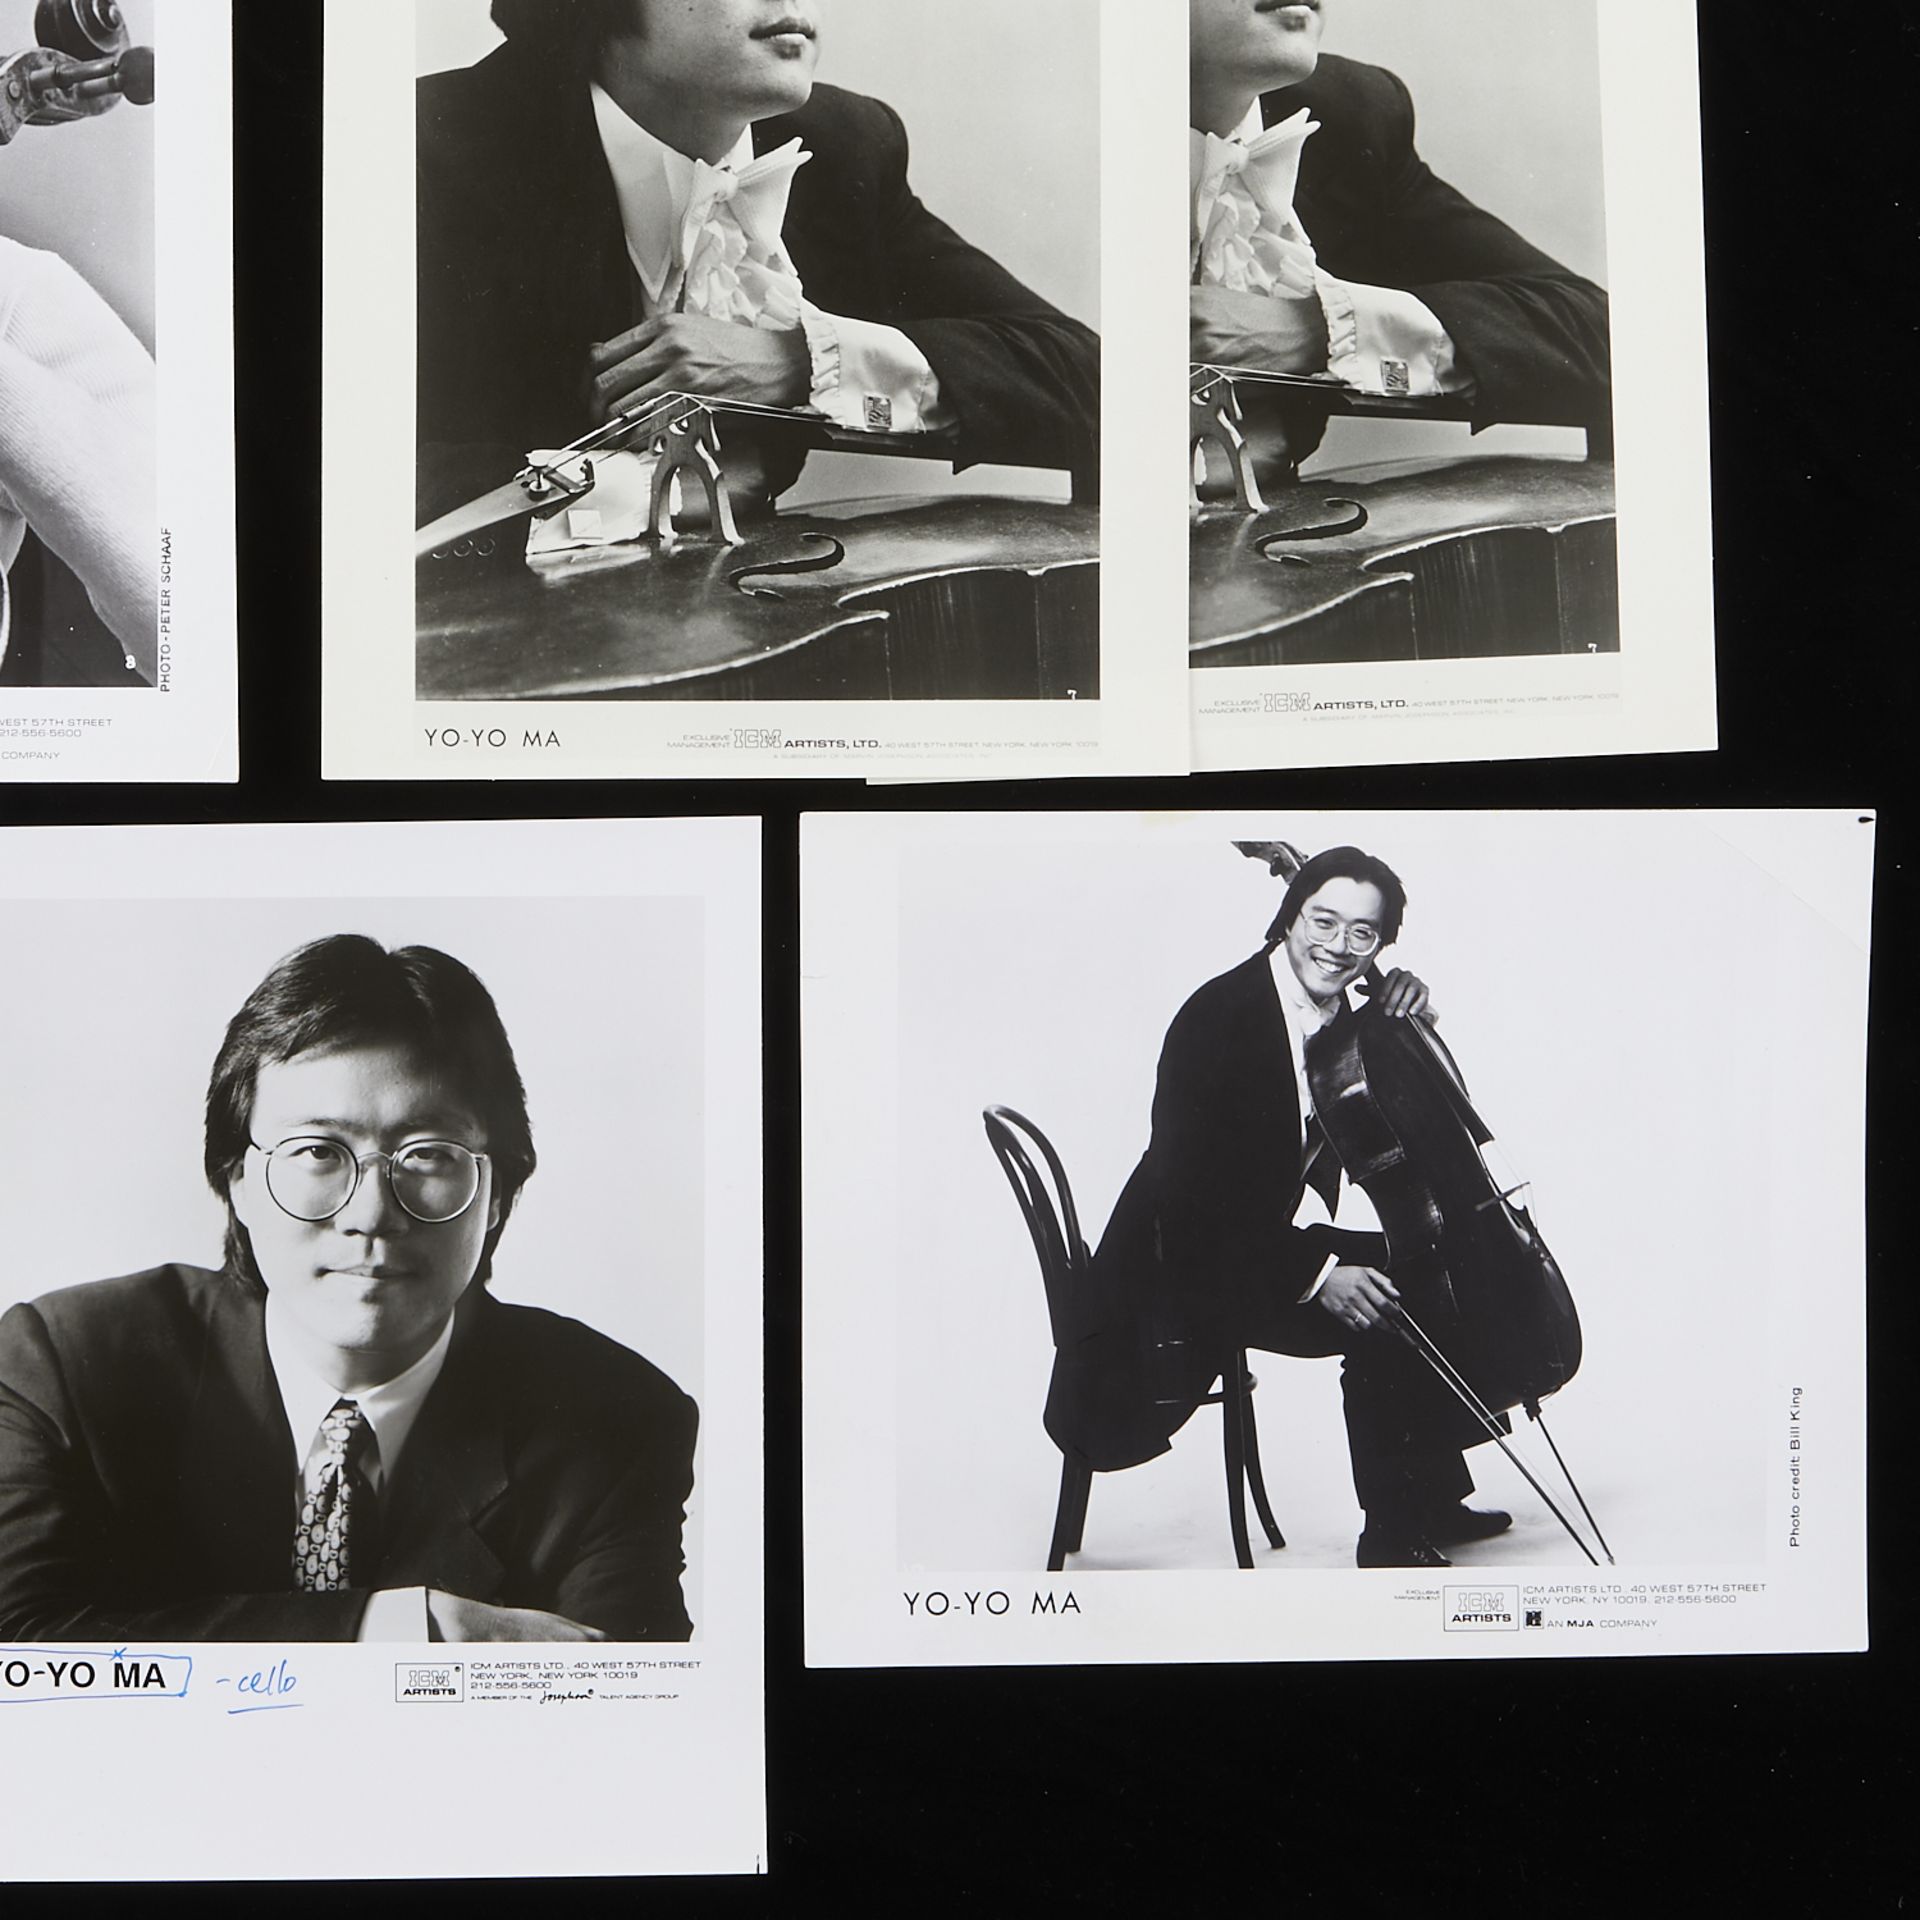 9 Yo-Yo Ma Photos from Star Tribune Archives - Image 2 of 10